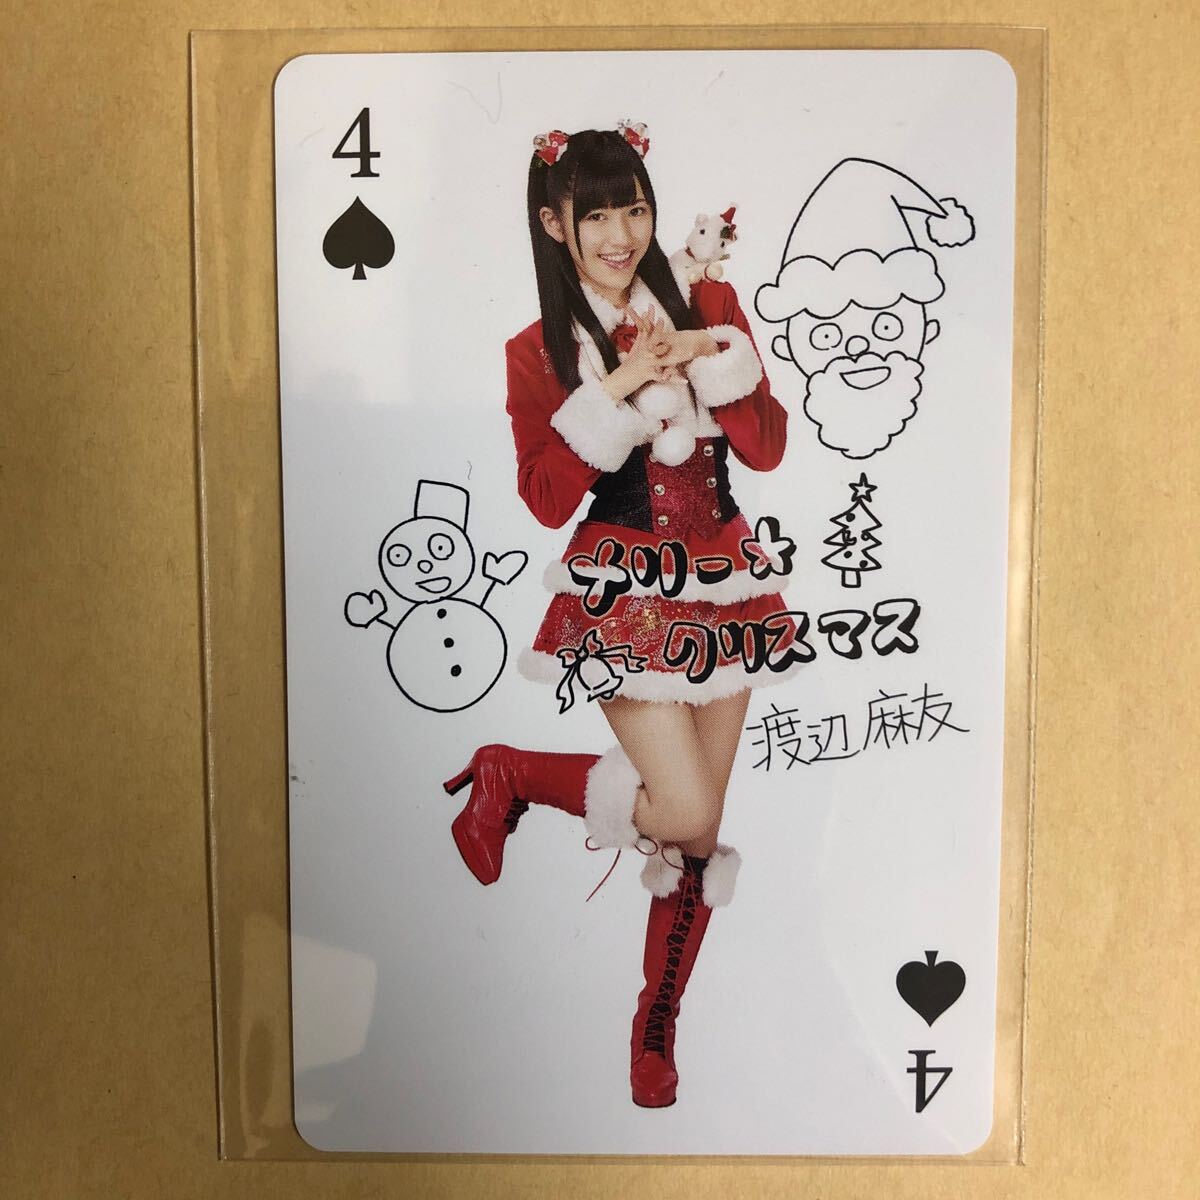 AKB48 Watanabe Mayu trading card idol gravure card playing cards star trading card 4 Spade 